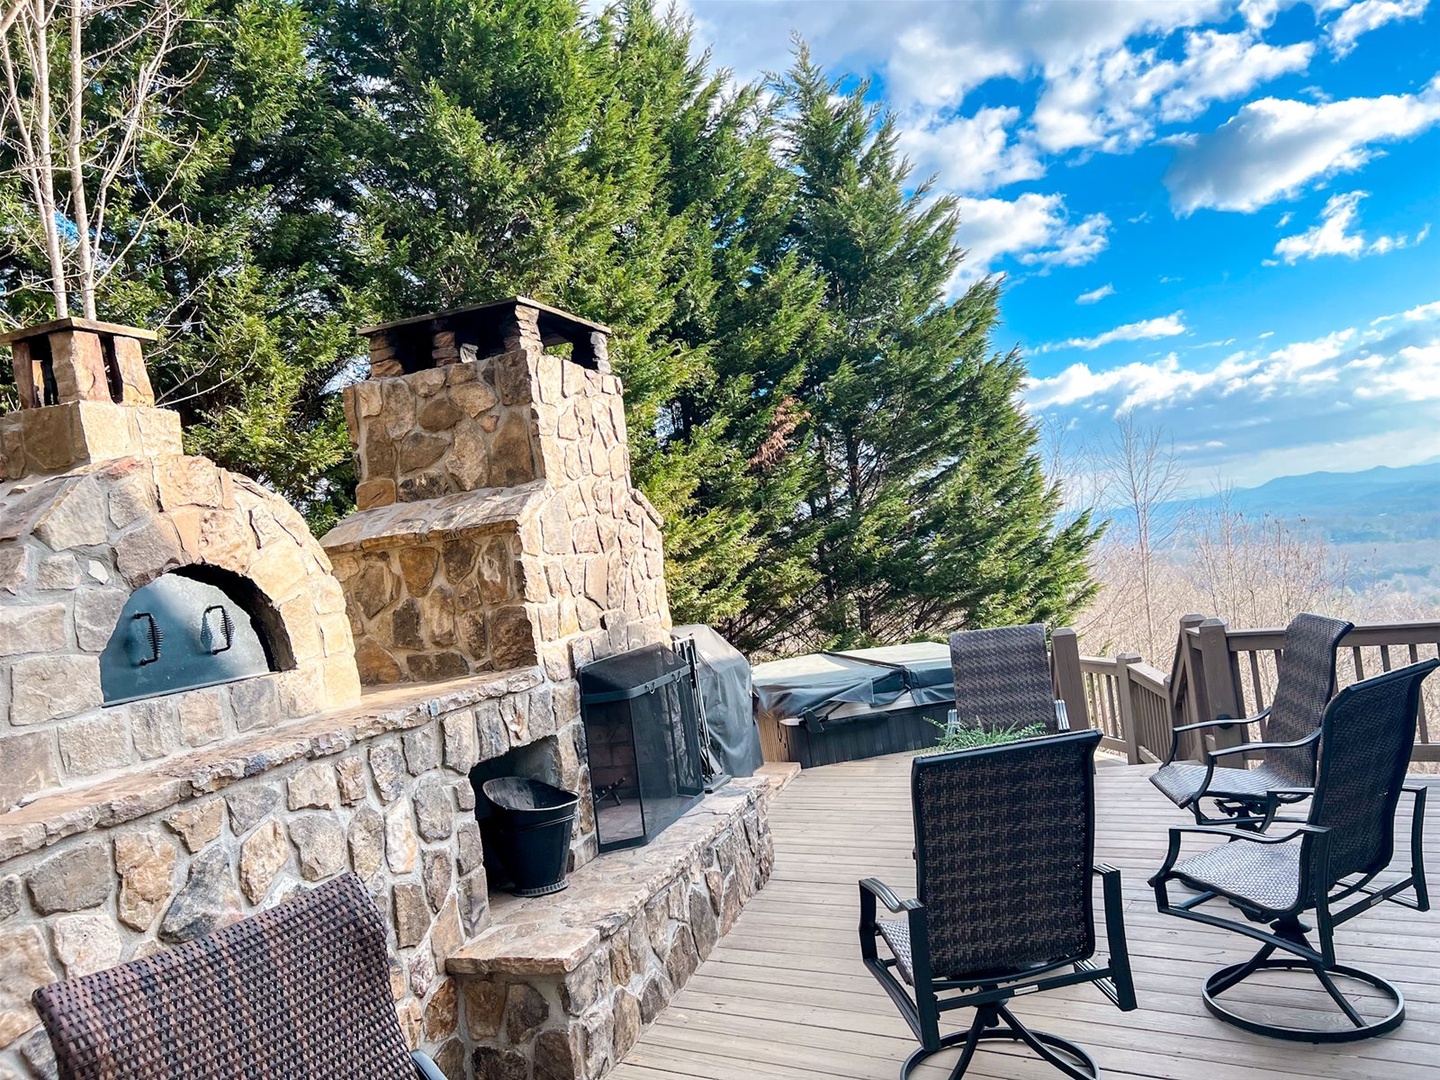 Sky Ridge - Outdoor fireplace and deck